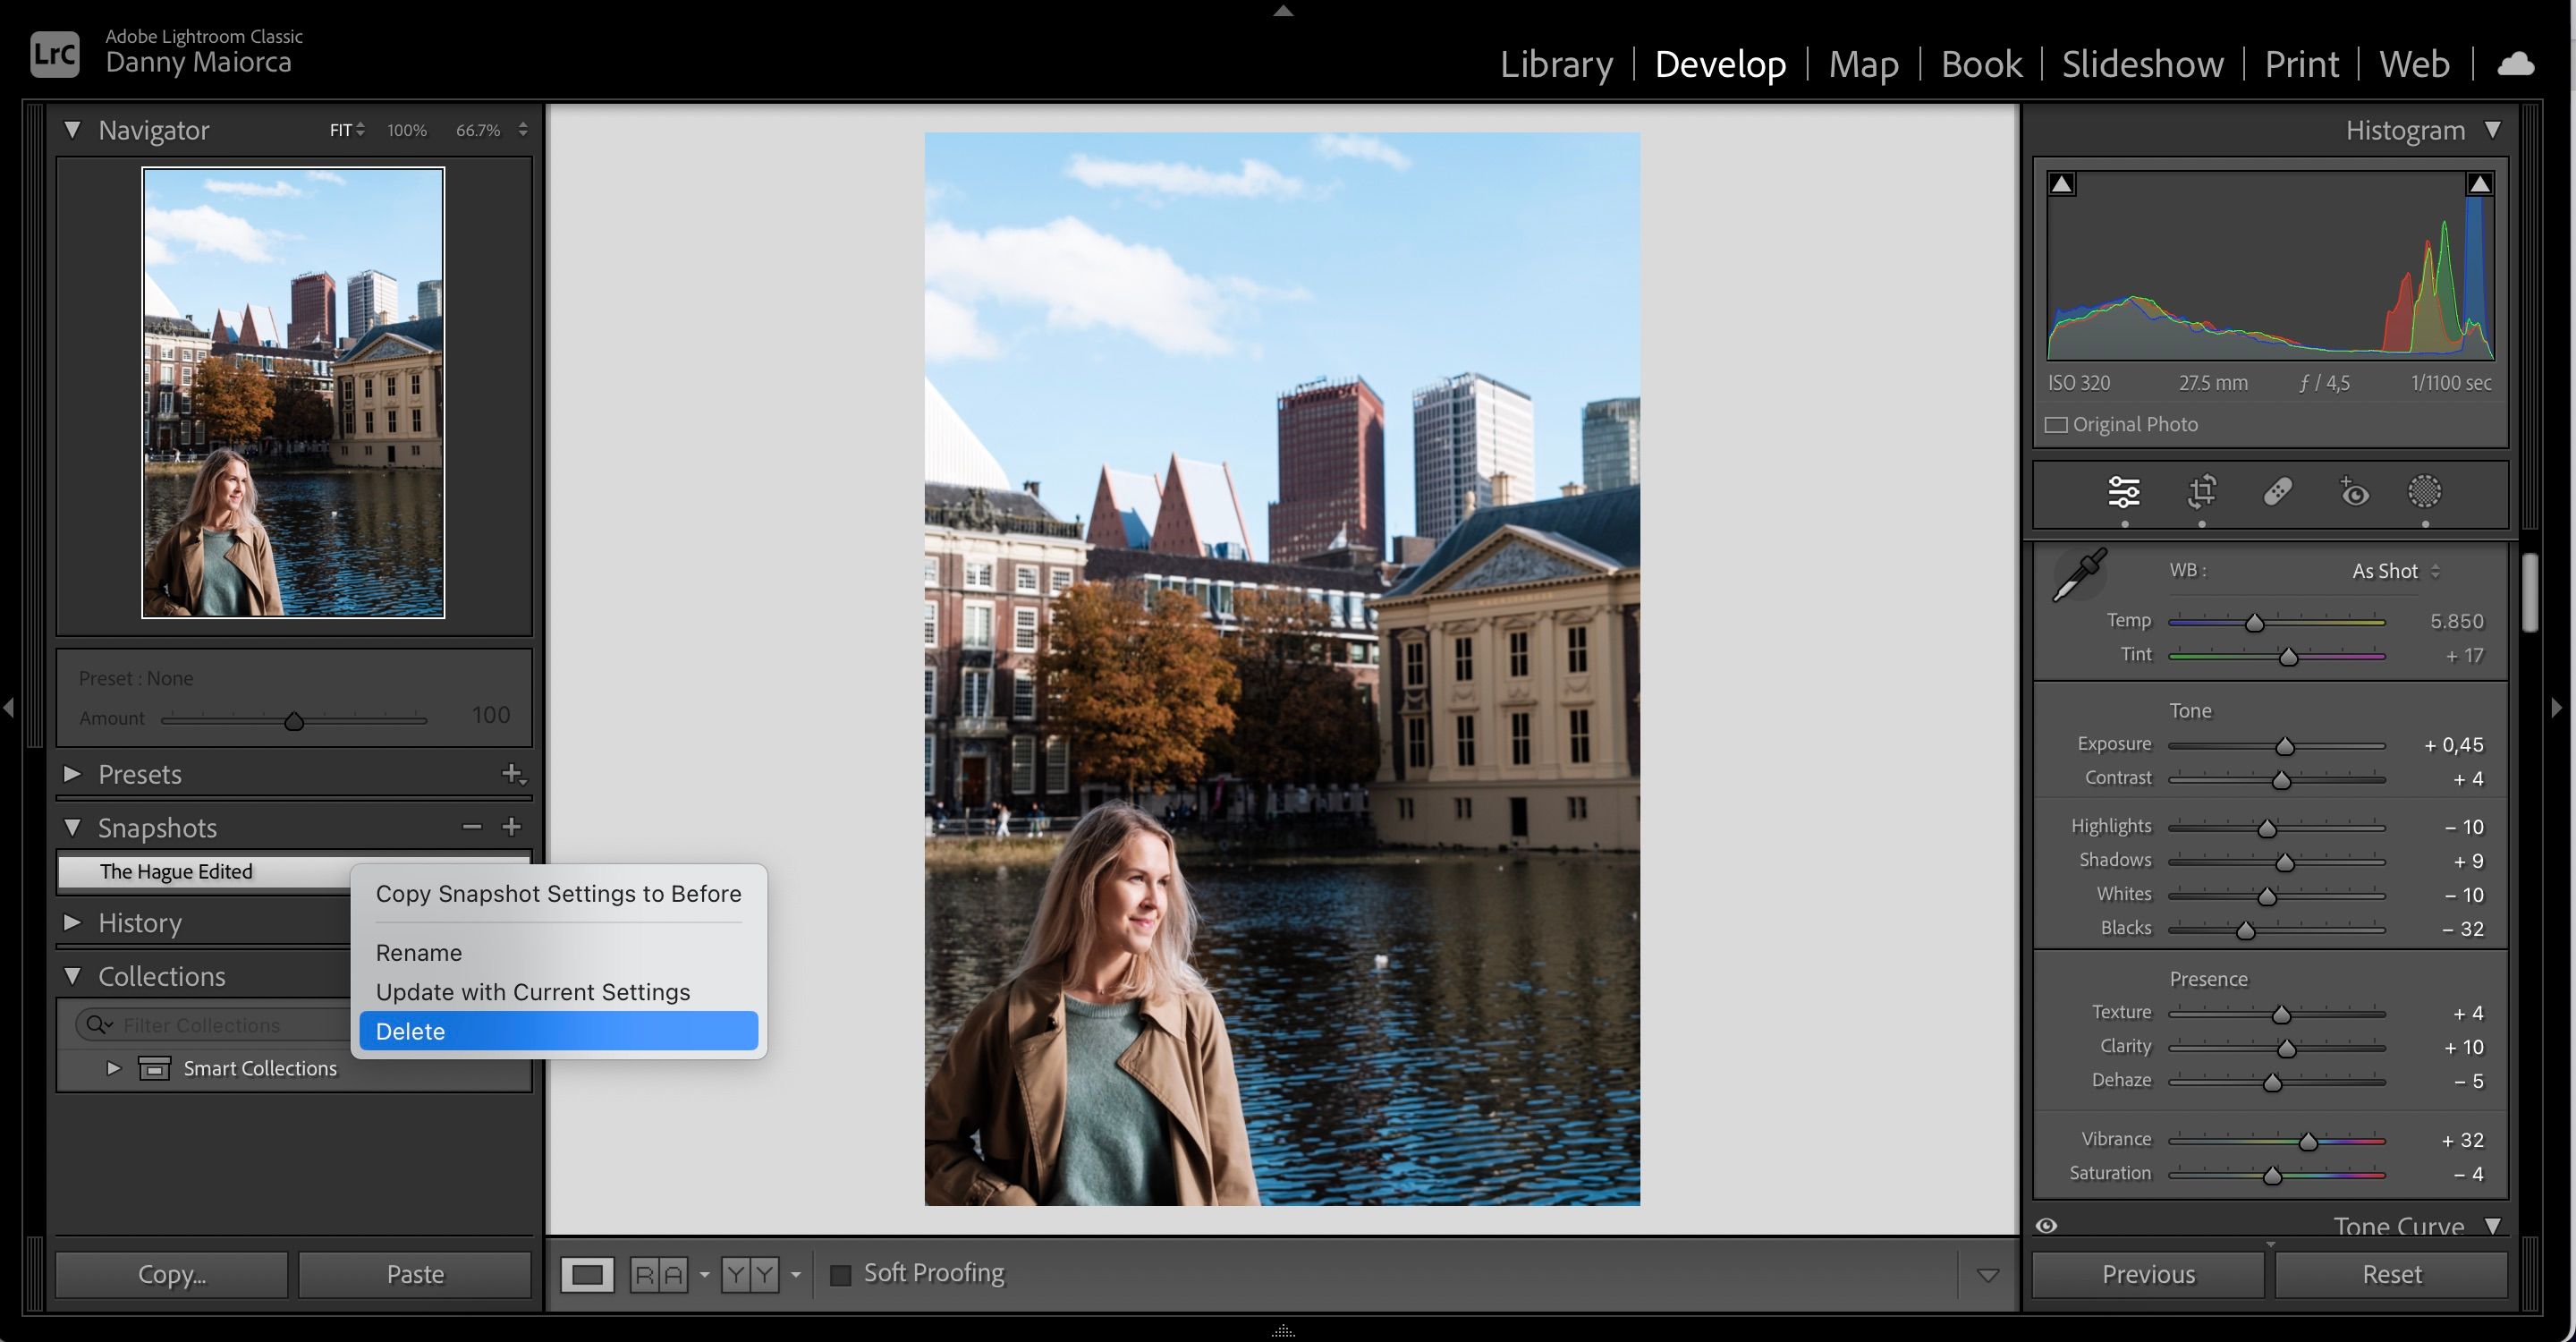 Delete a Snapshot in Adobe Lightroom